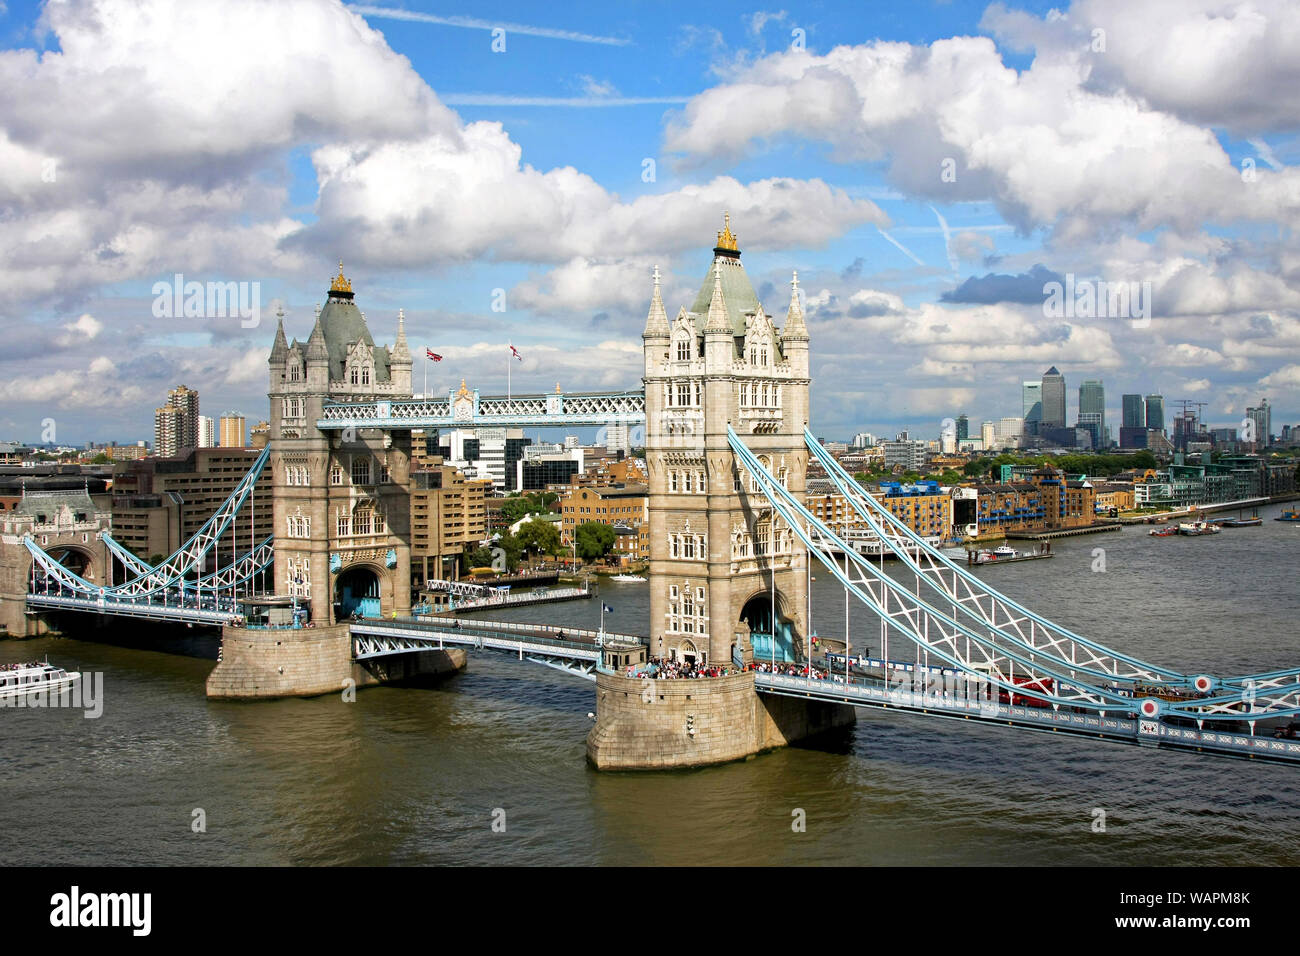 Famous London landmark Tower Bridge at Thames River Stock Photo